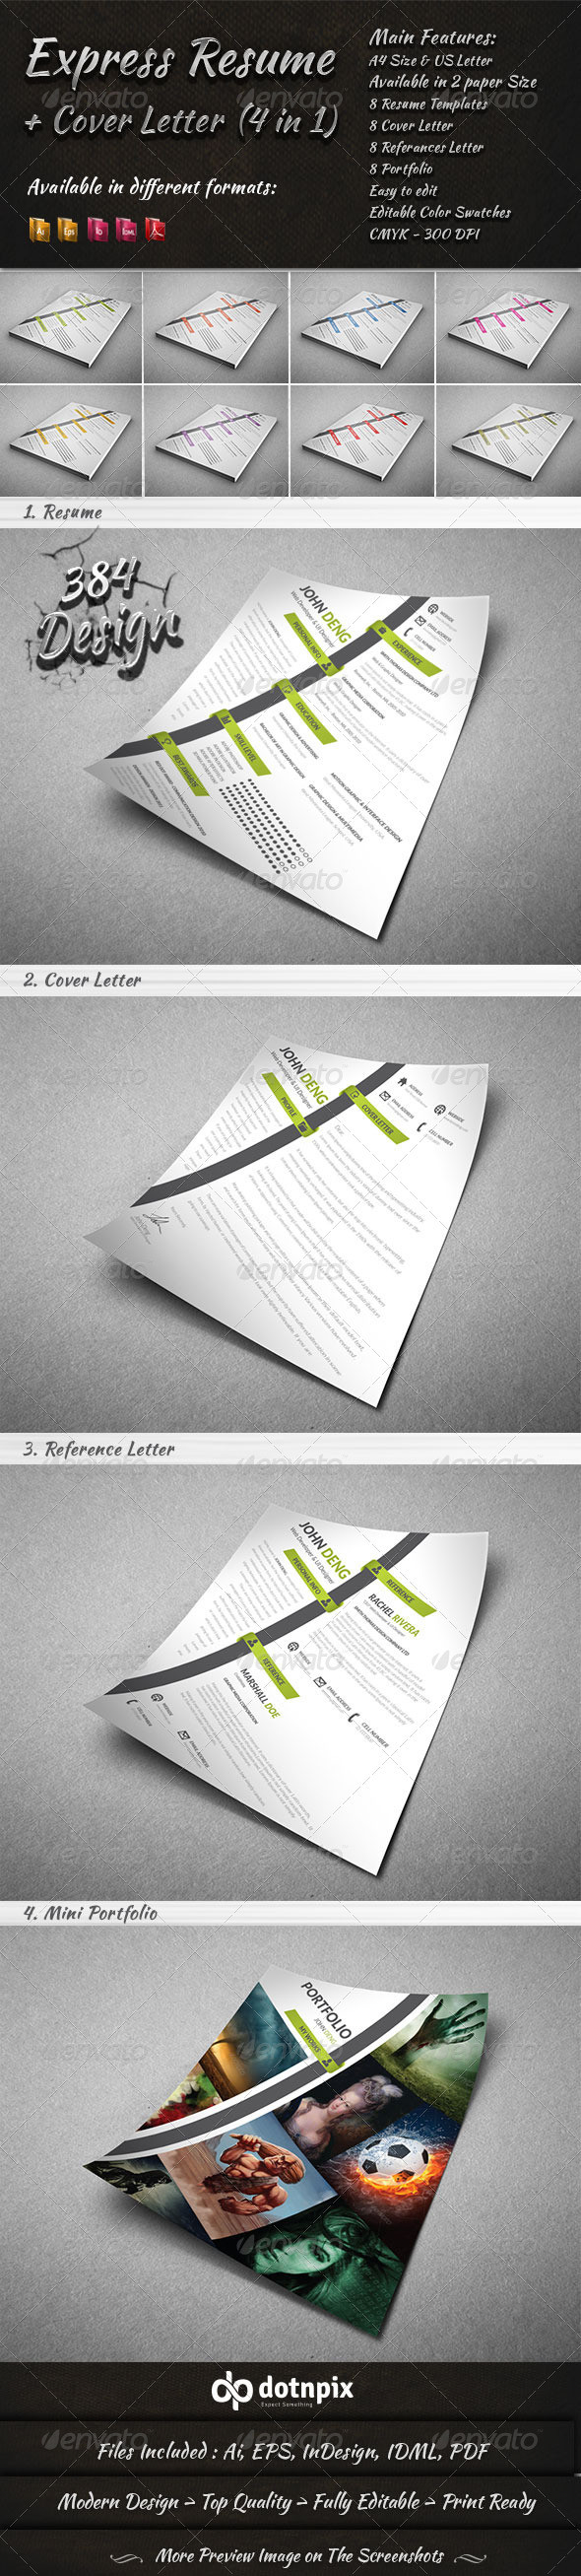 Curriculum vitae cv resume template cover letter portfolio job a4 us letter resume